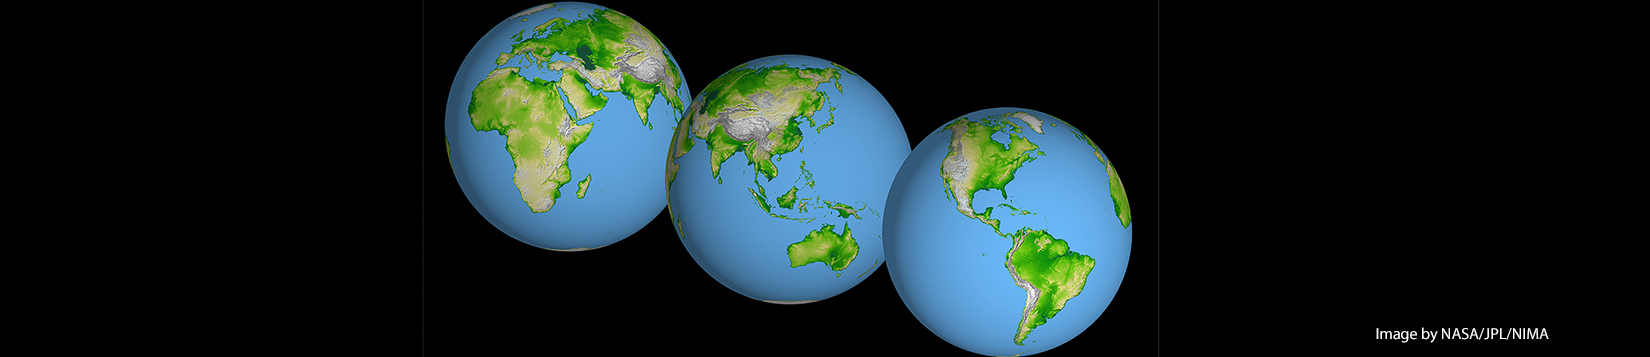 World globes, image by NASA/JPL/NIMA